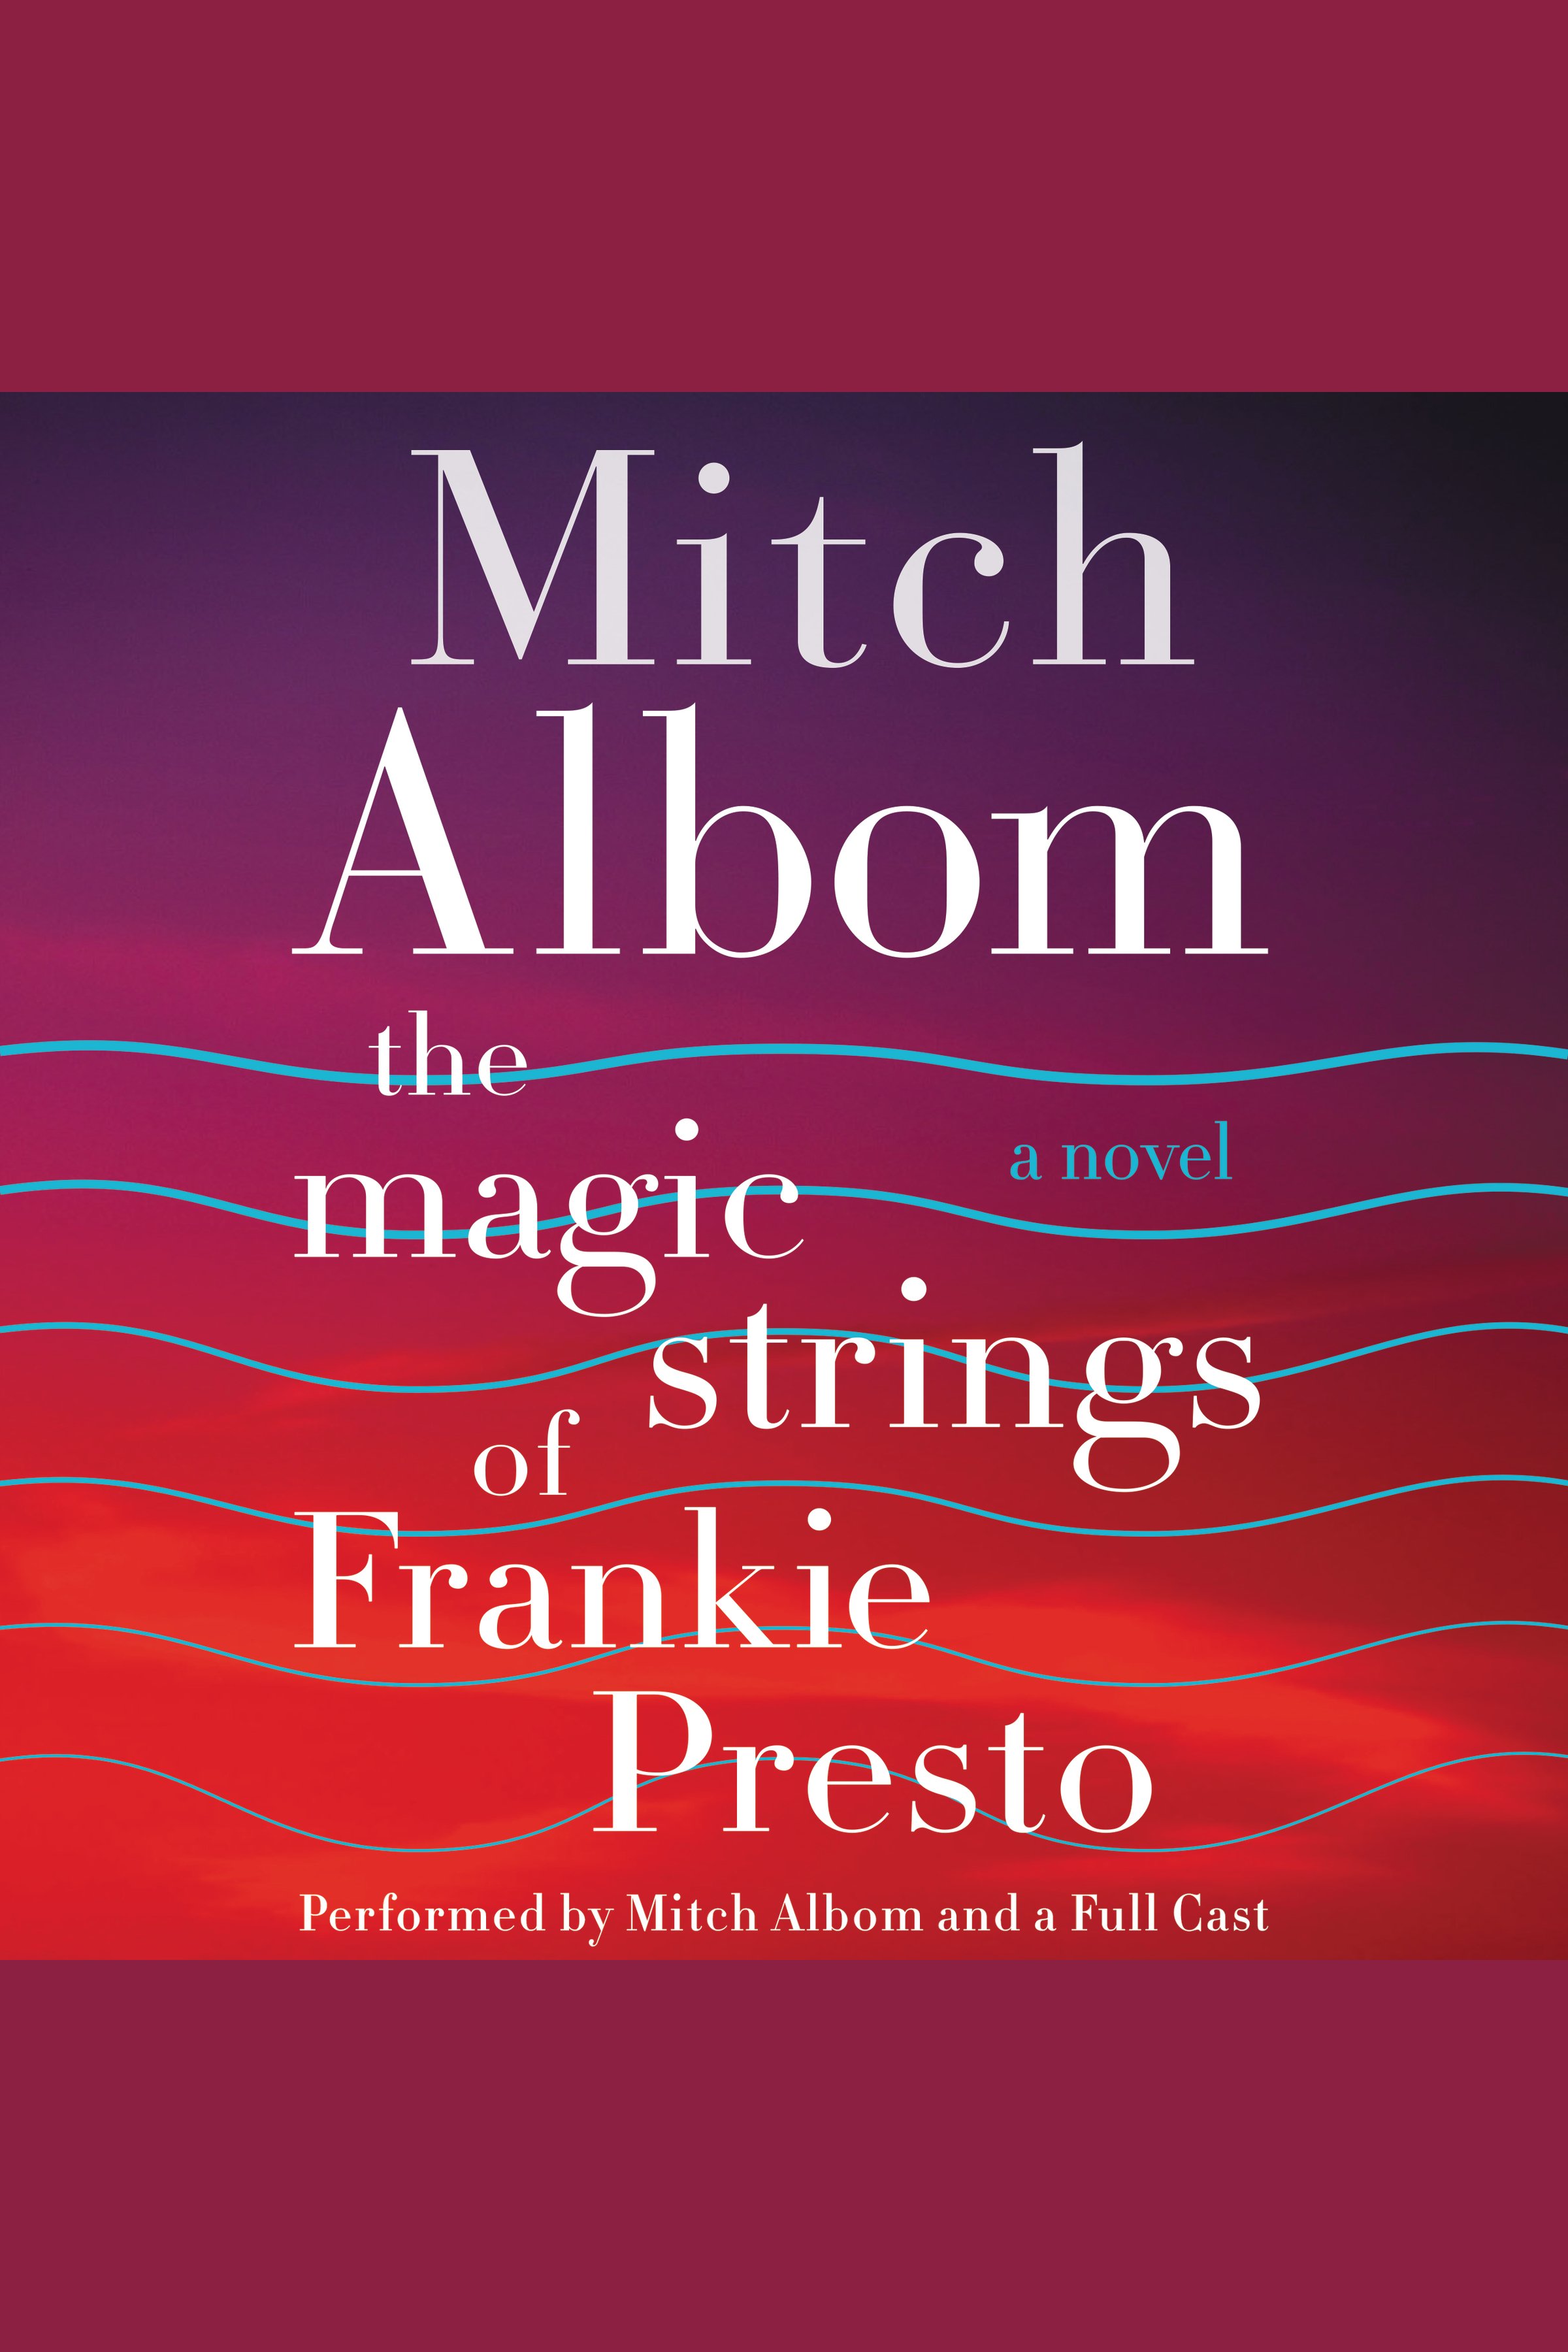 The magic strings of Frankie Presto cover image